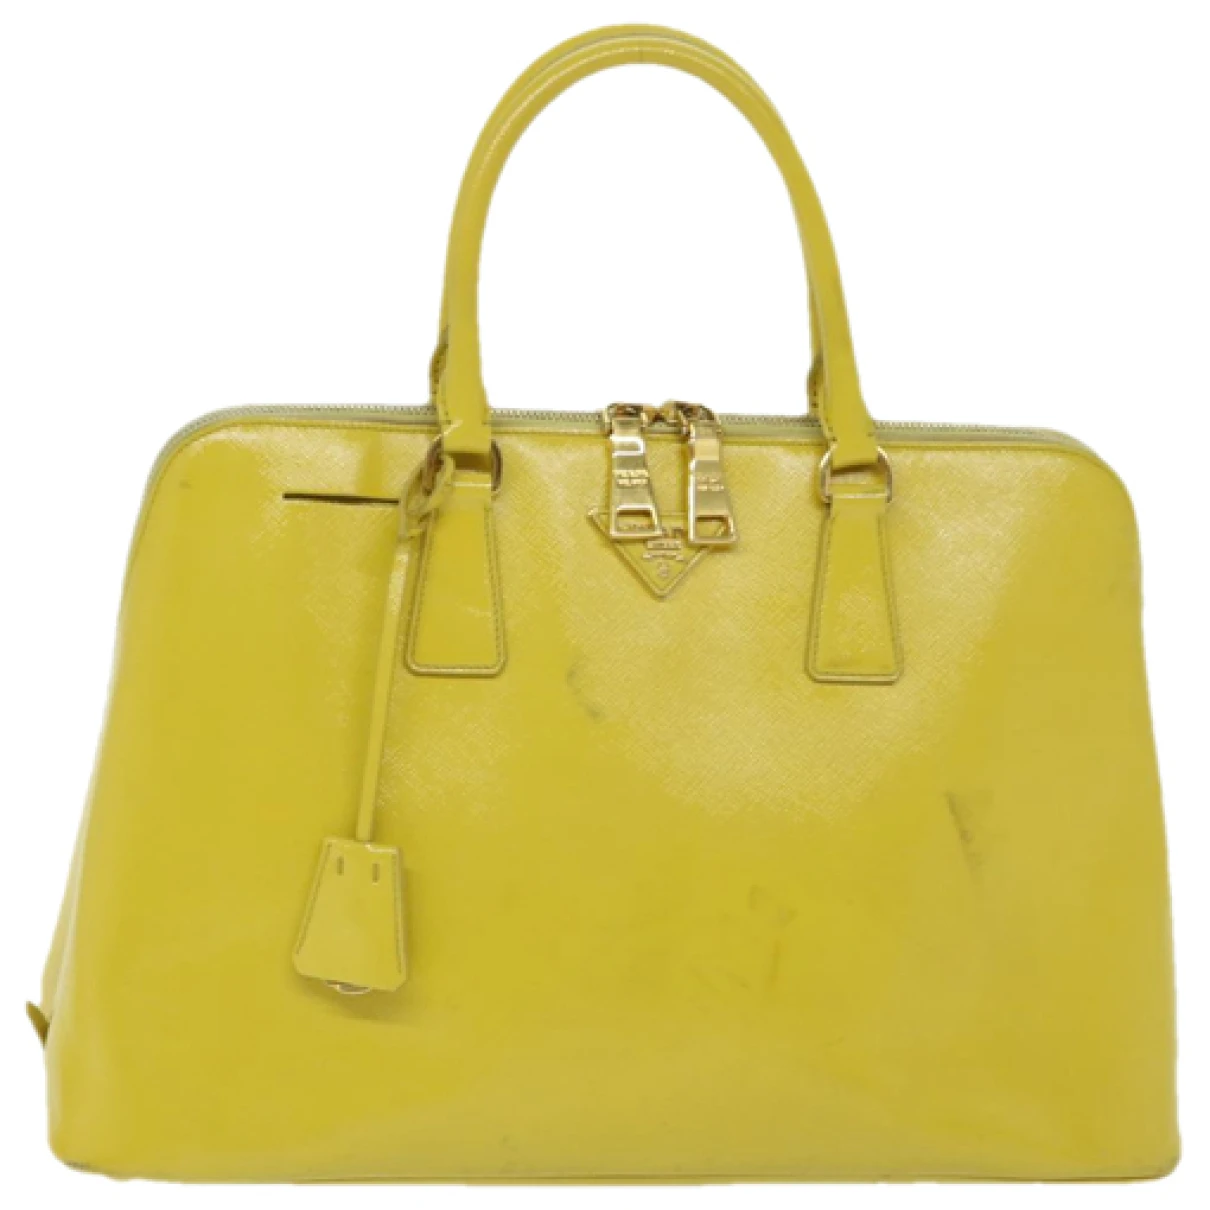 Pre-owned Prada Saffiano Patent Leather Handbag In Yellow